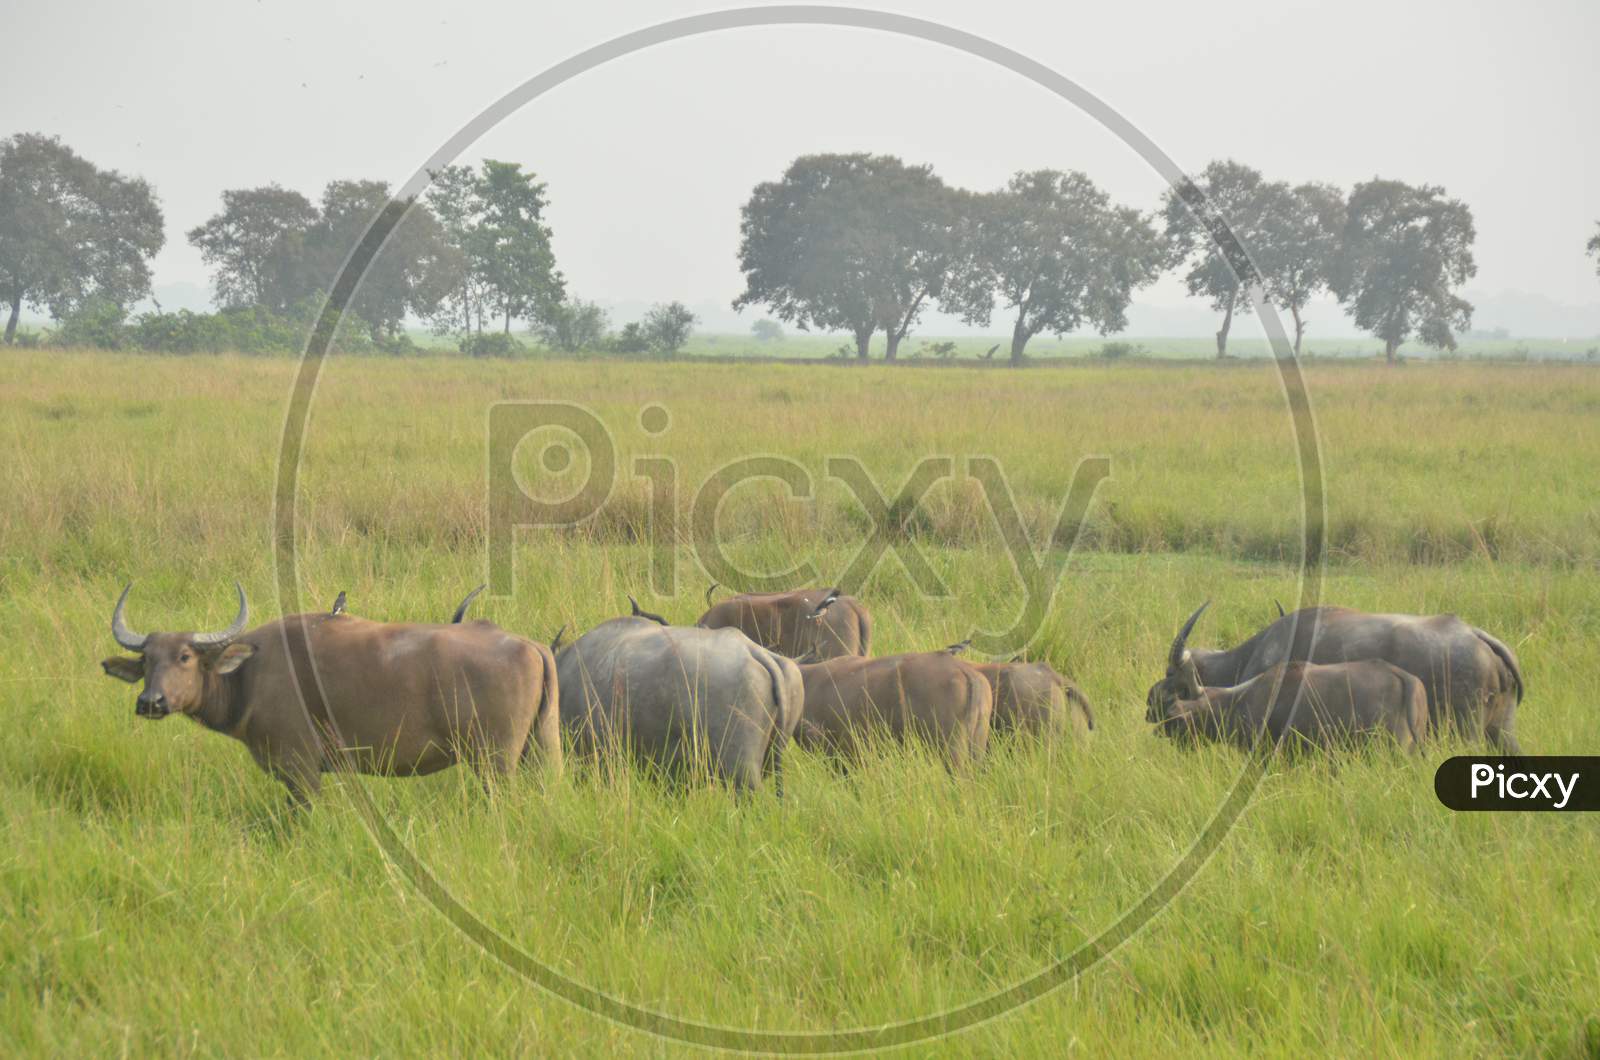 Wild Buffaloes  in Tropical Grass Lands at Kaziranga National Park, Assam